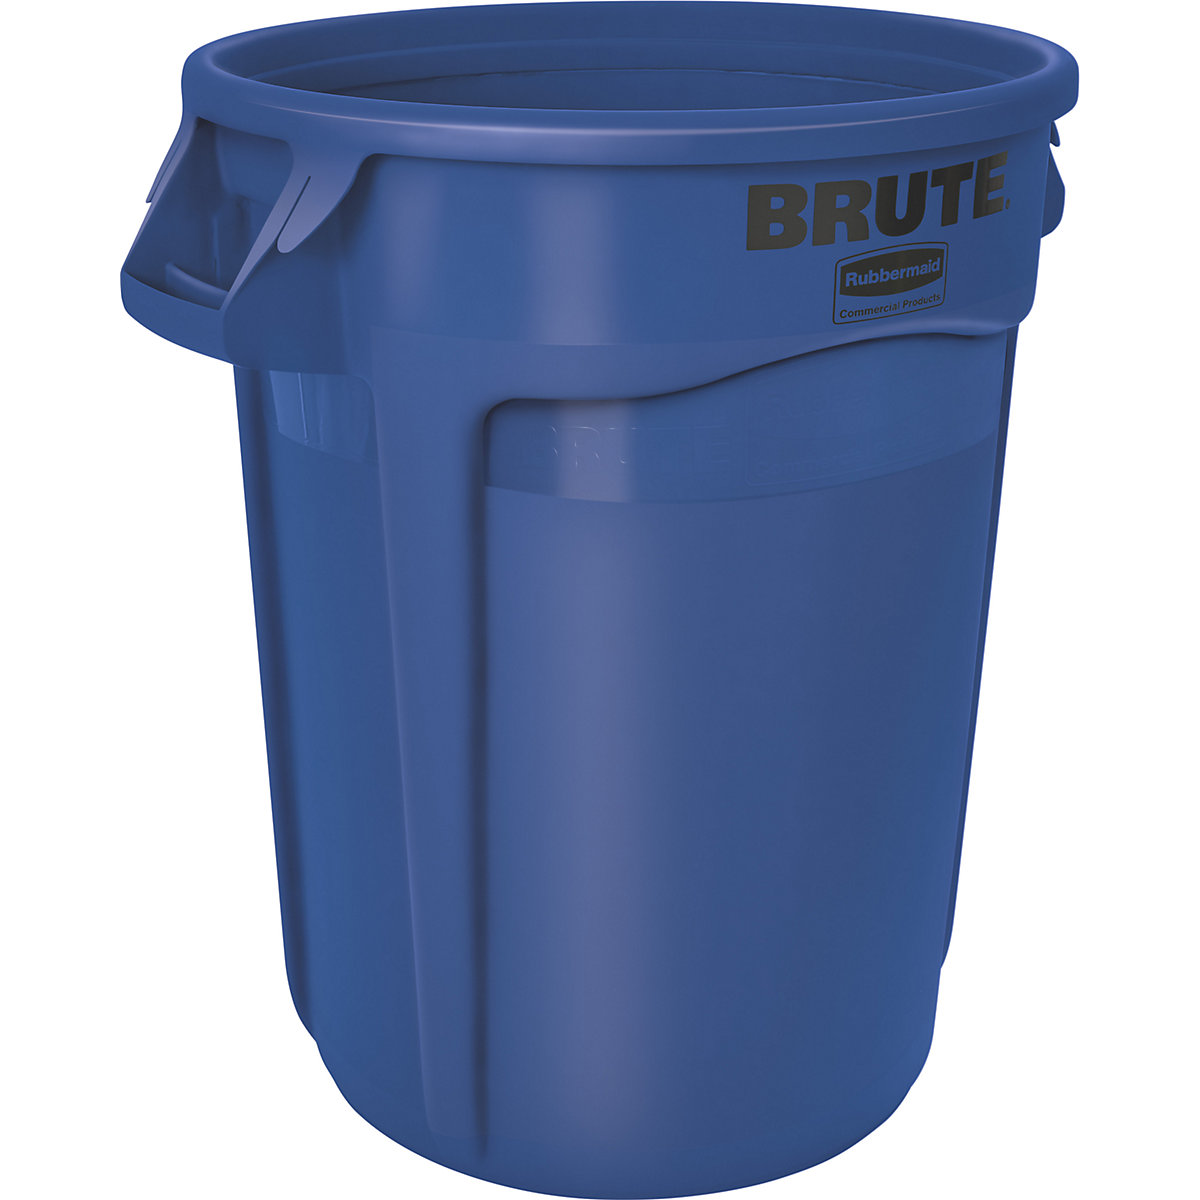 Univerzalni kontejner BRUTE®, okrugli – Rubbermaid, sadržaj 75 l, u plavoj boji